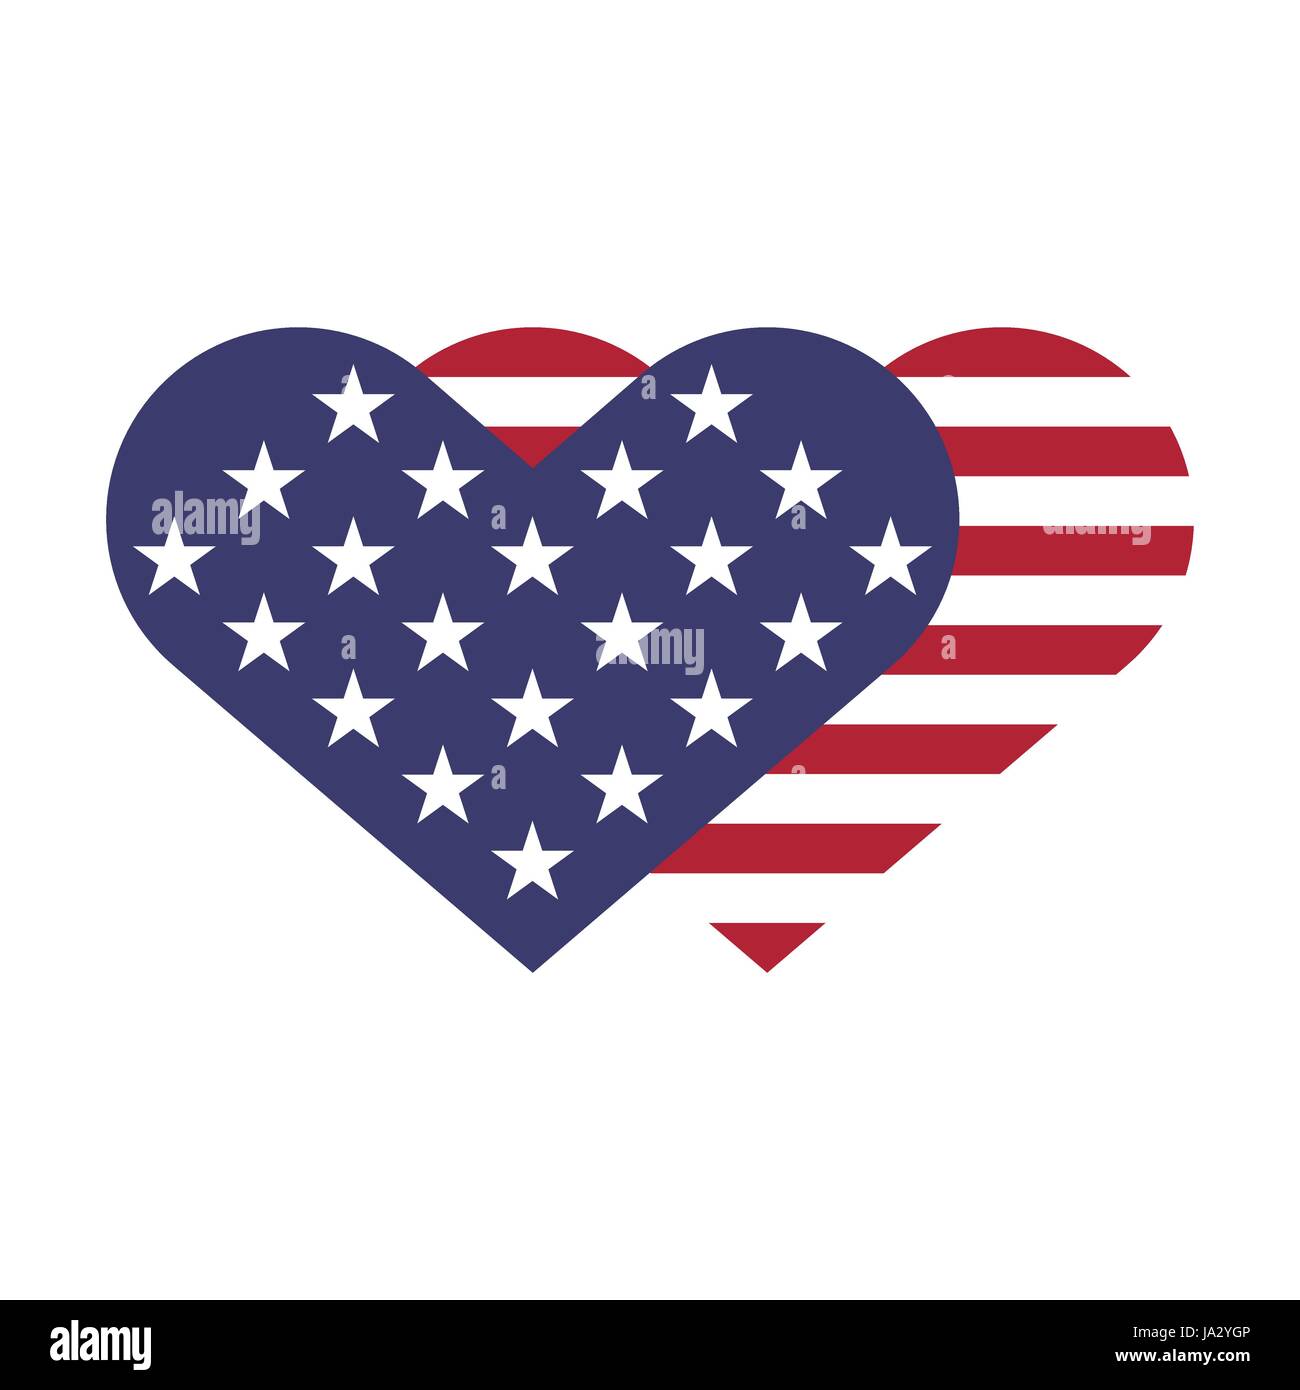 USA Flagge Herzen Form Vektor-Illustration für Independence Day, Gedenktag oder andere Stock Vektor